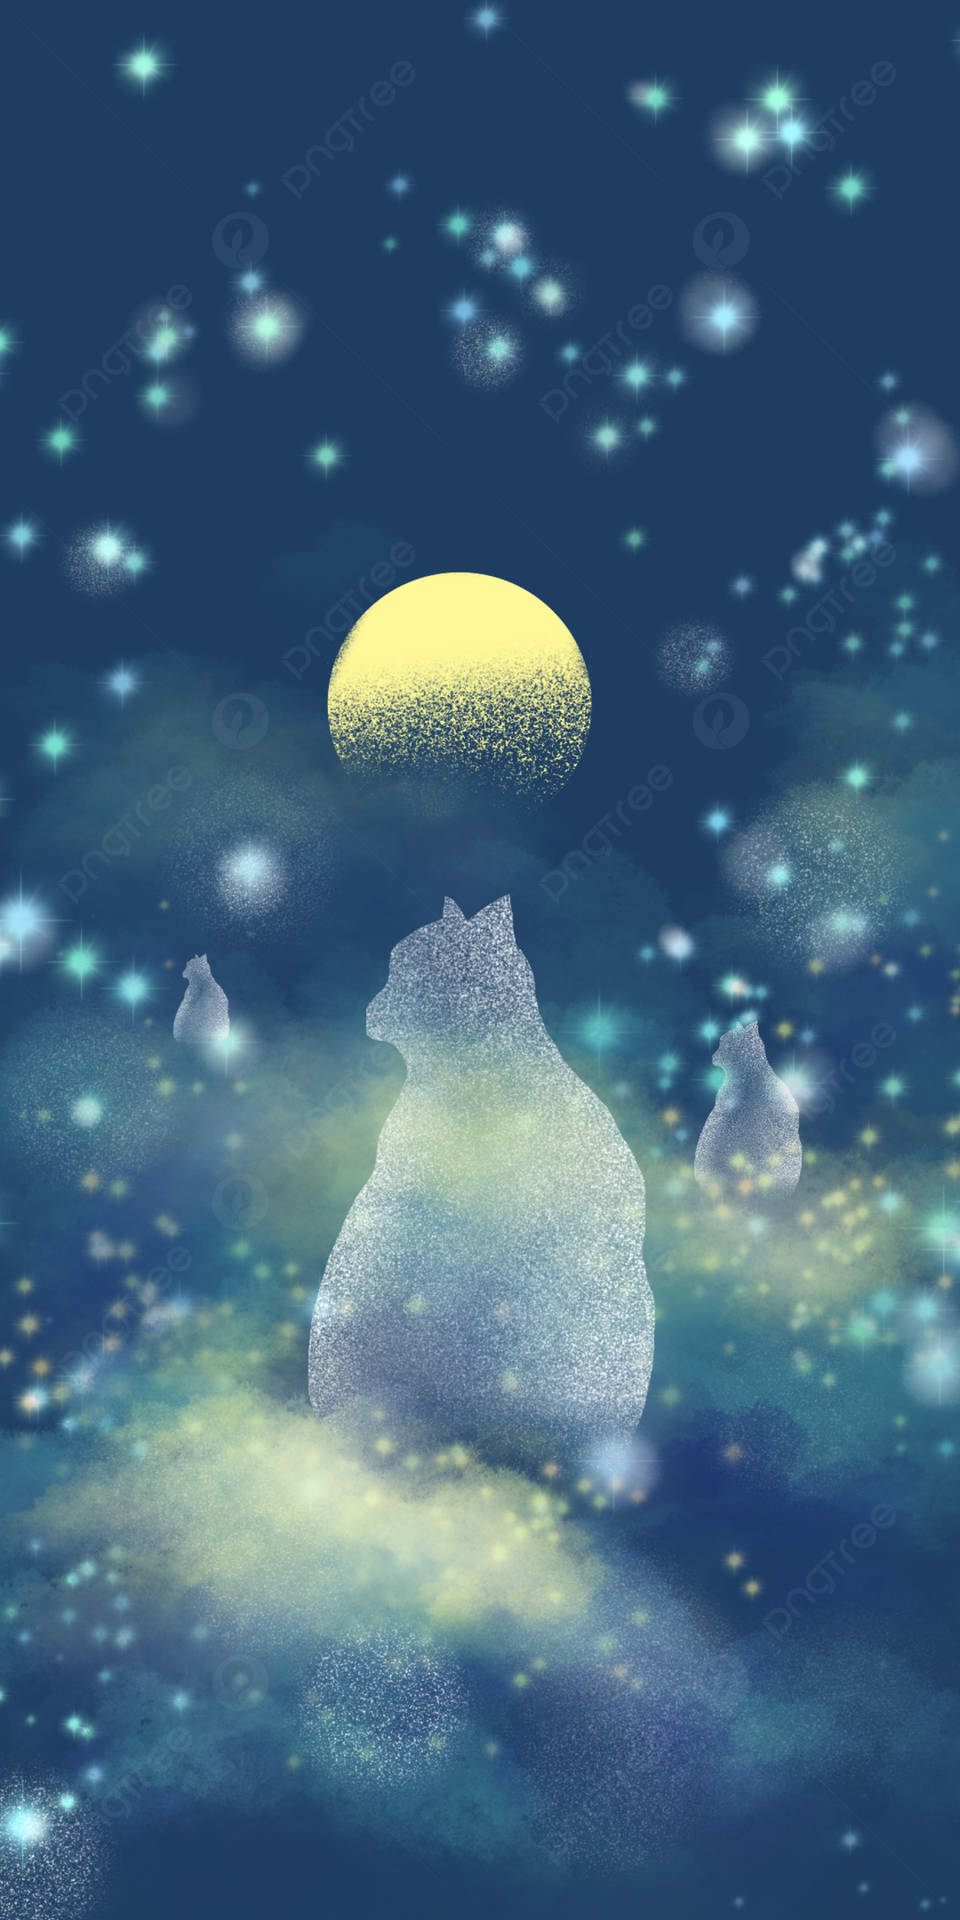 A Bear In The Moonlight Wallpaper